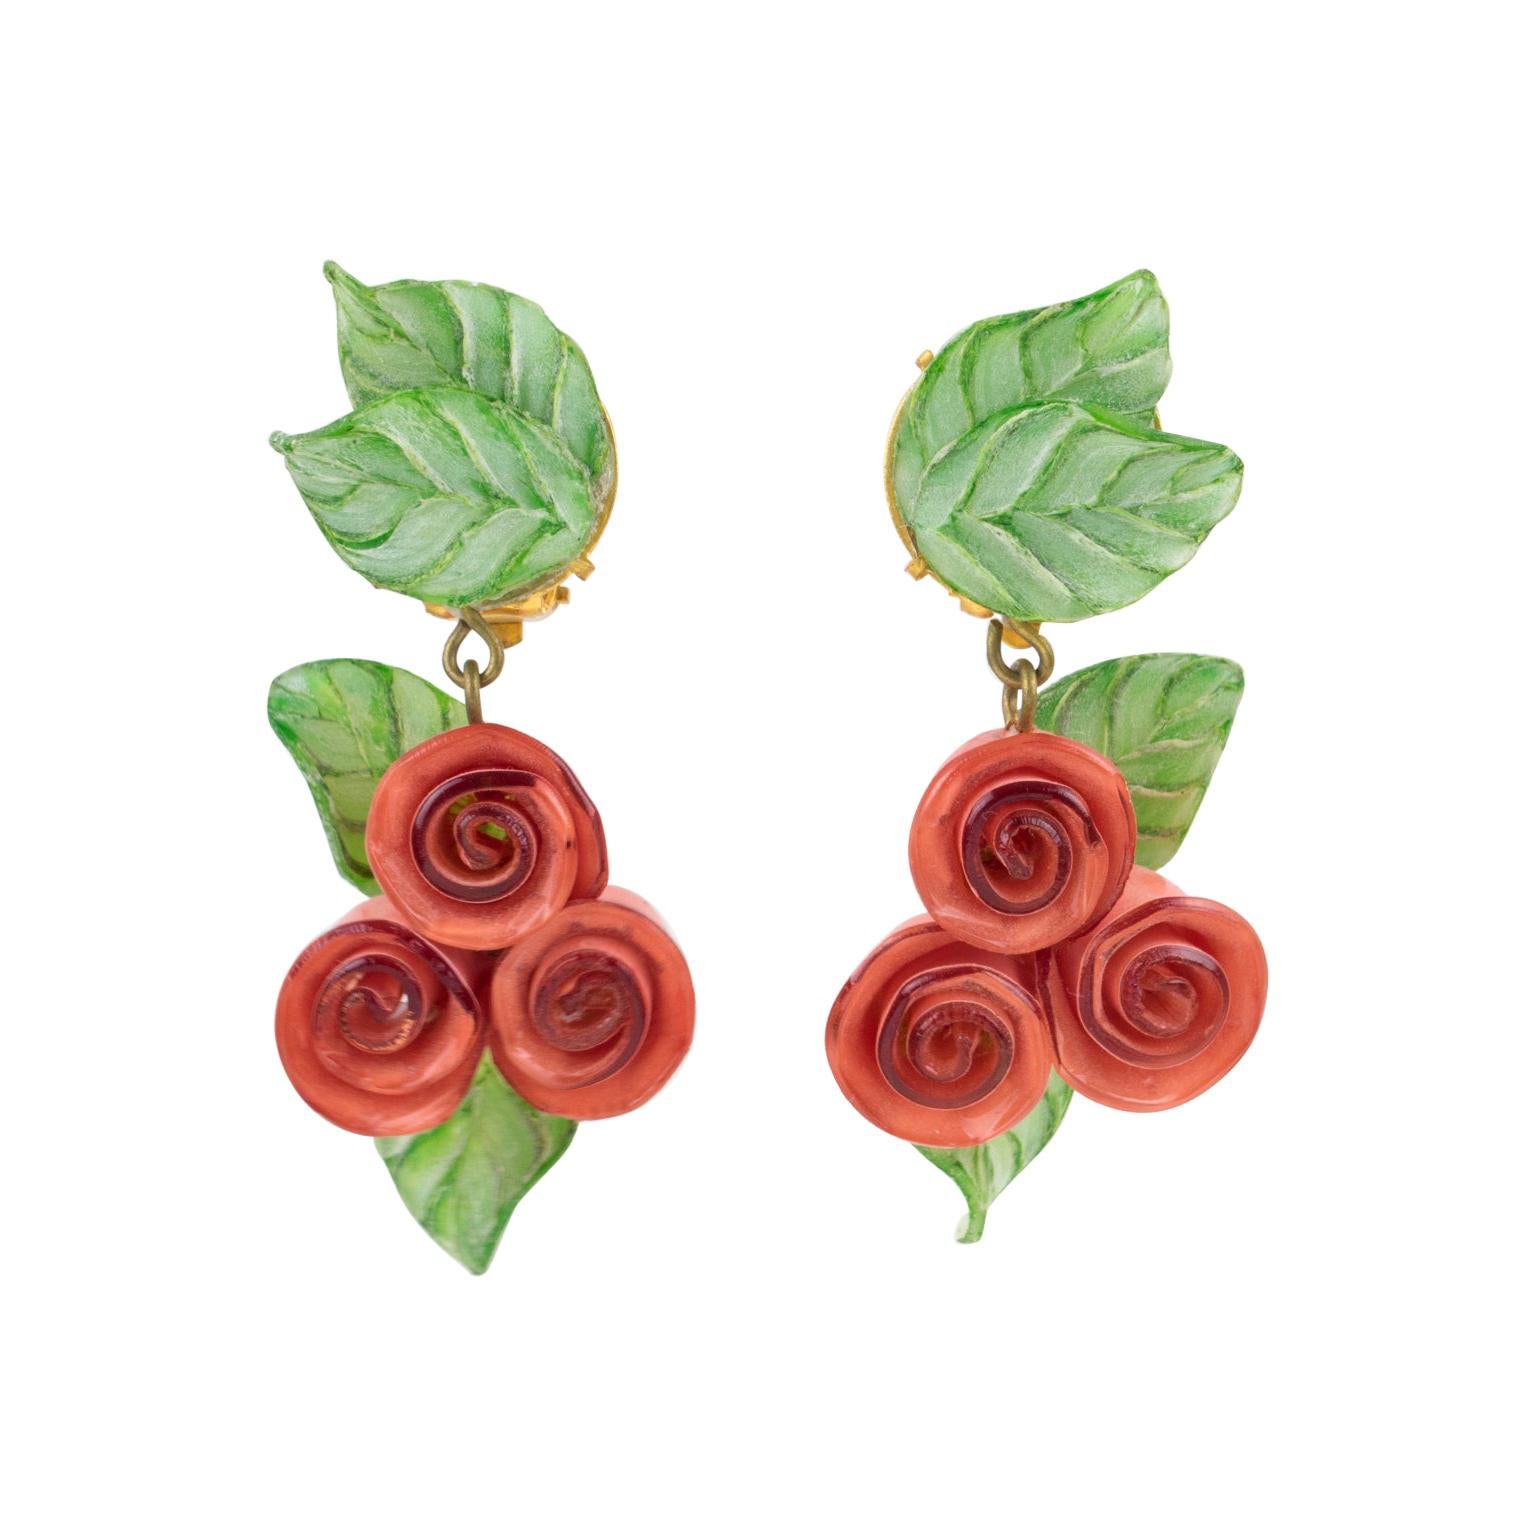 Cilea Paris Clip Earrings Pink and Green Resin Rosebuds